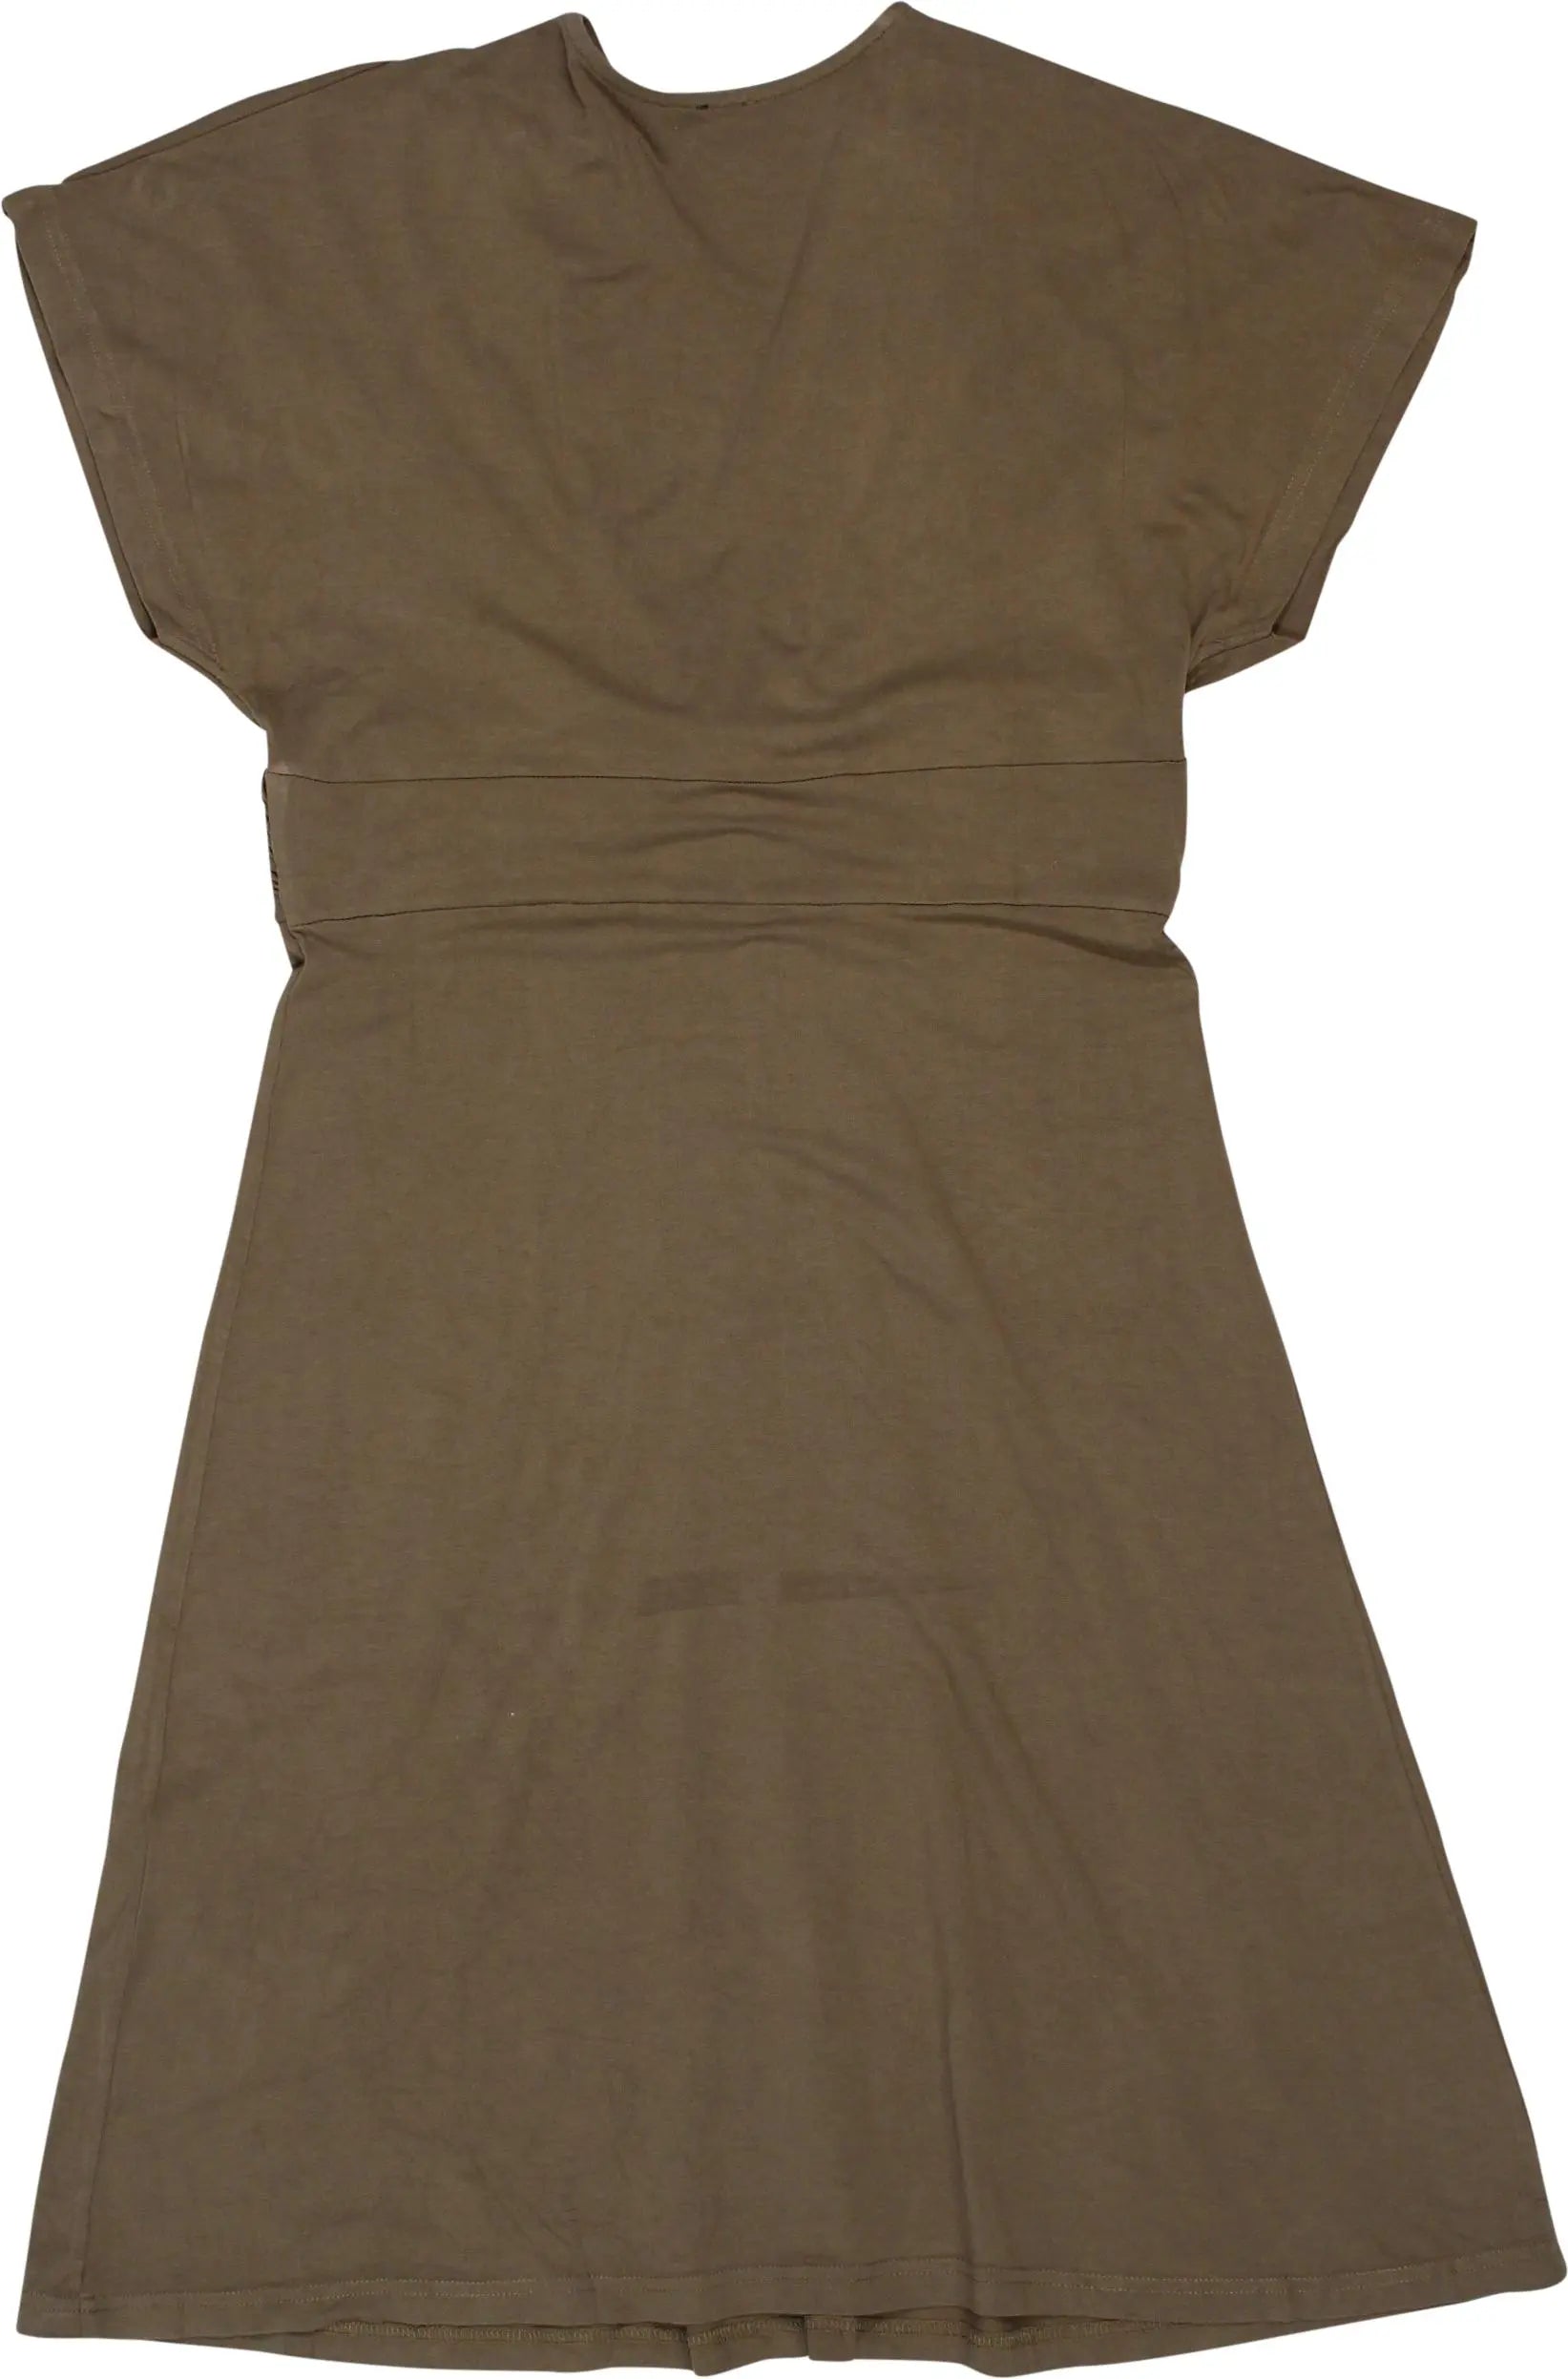 Esprit - Brown Short Dress- ThriftTale.com - Vintage and second handclothing